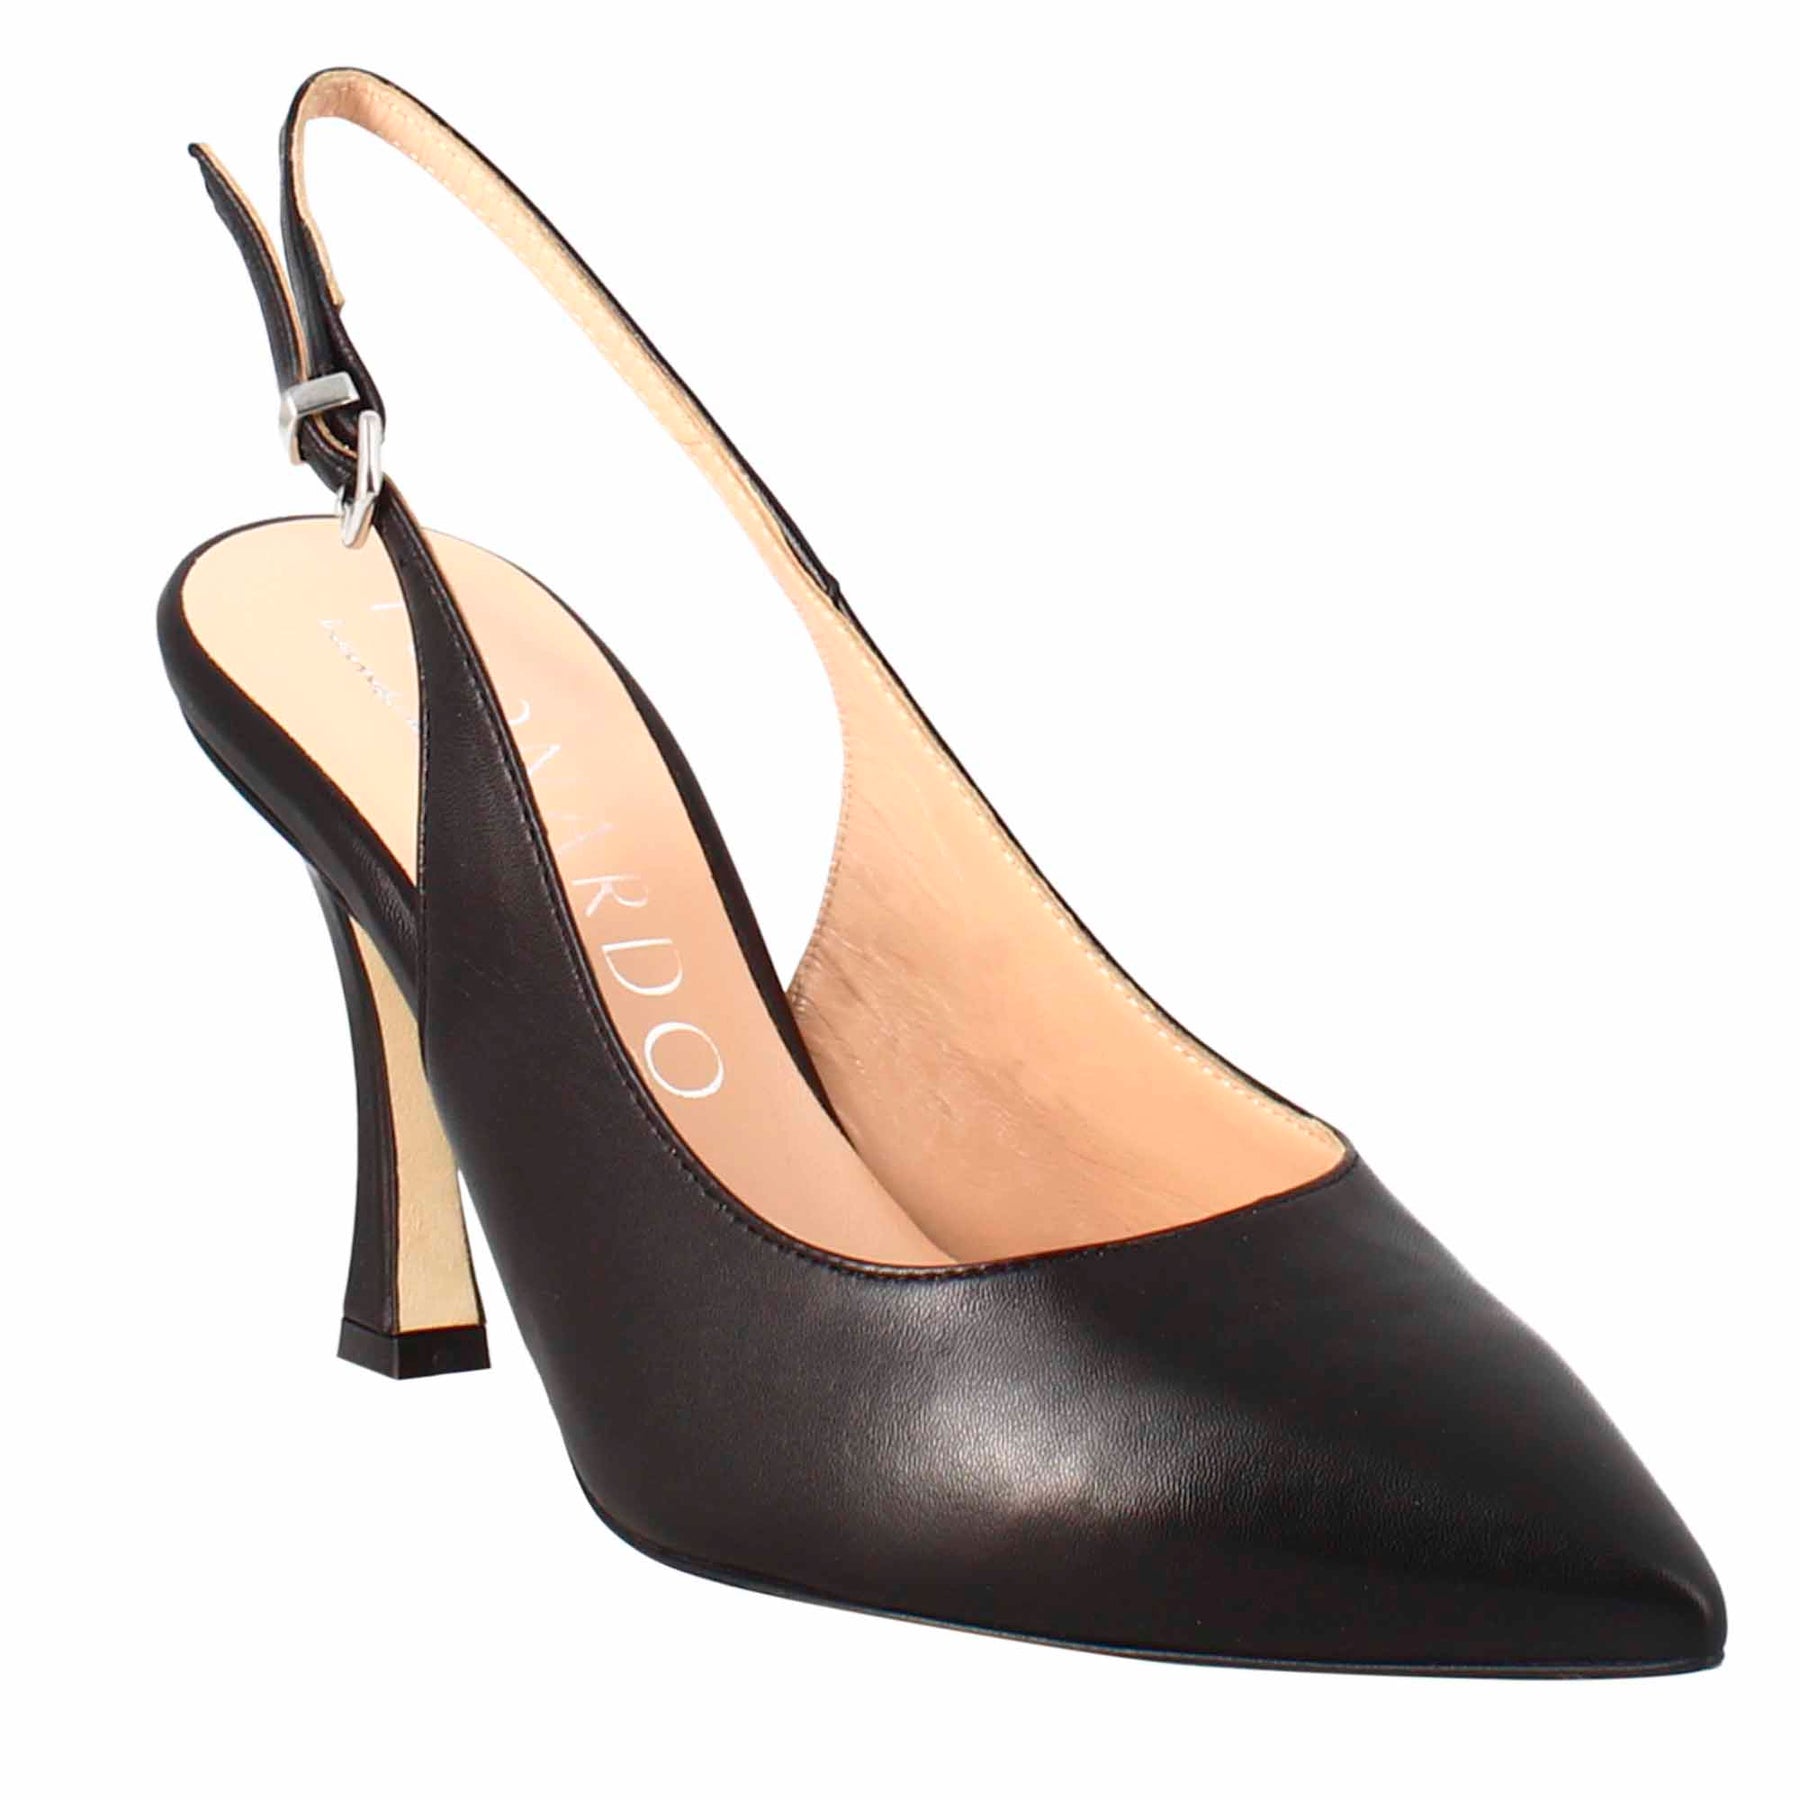 Aldo Solid Black Heels Size 37 (EU) - 72% off | ThredUp